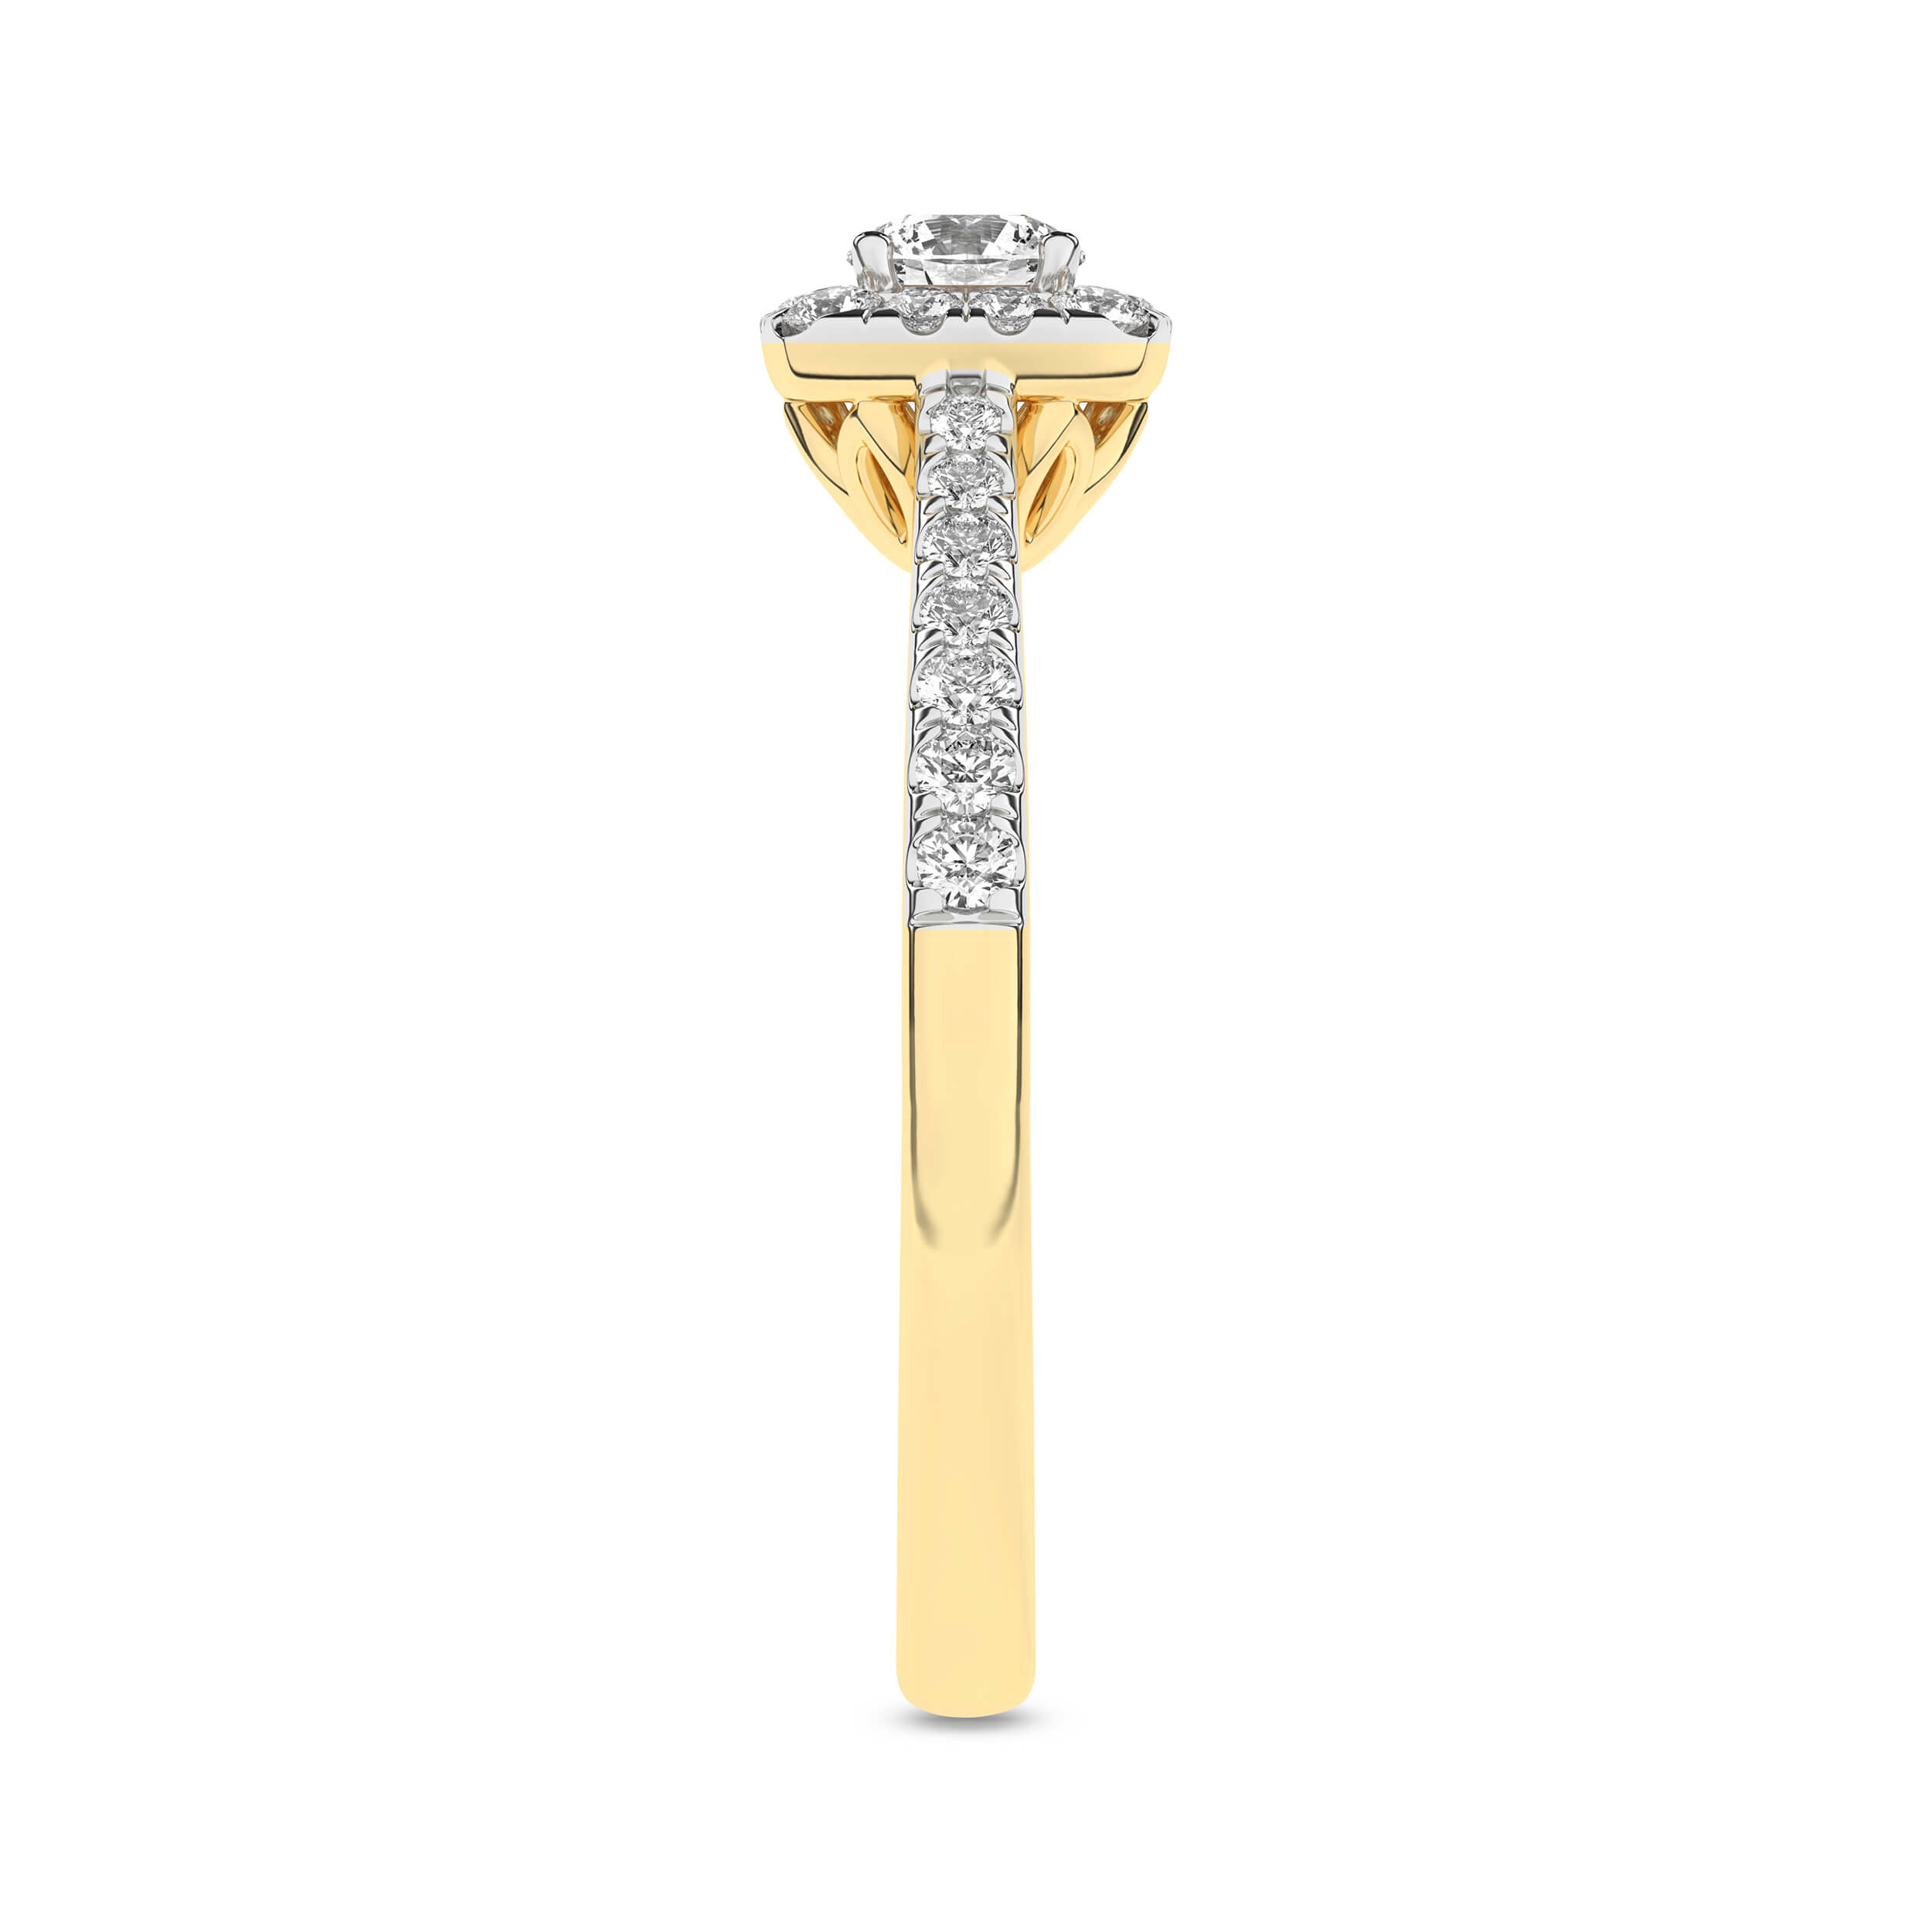 Inel de logodna din Aur Galben 14K cu Diamante 0.50Ct, articol RB17645EG, previzualizare foto 2